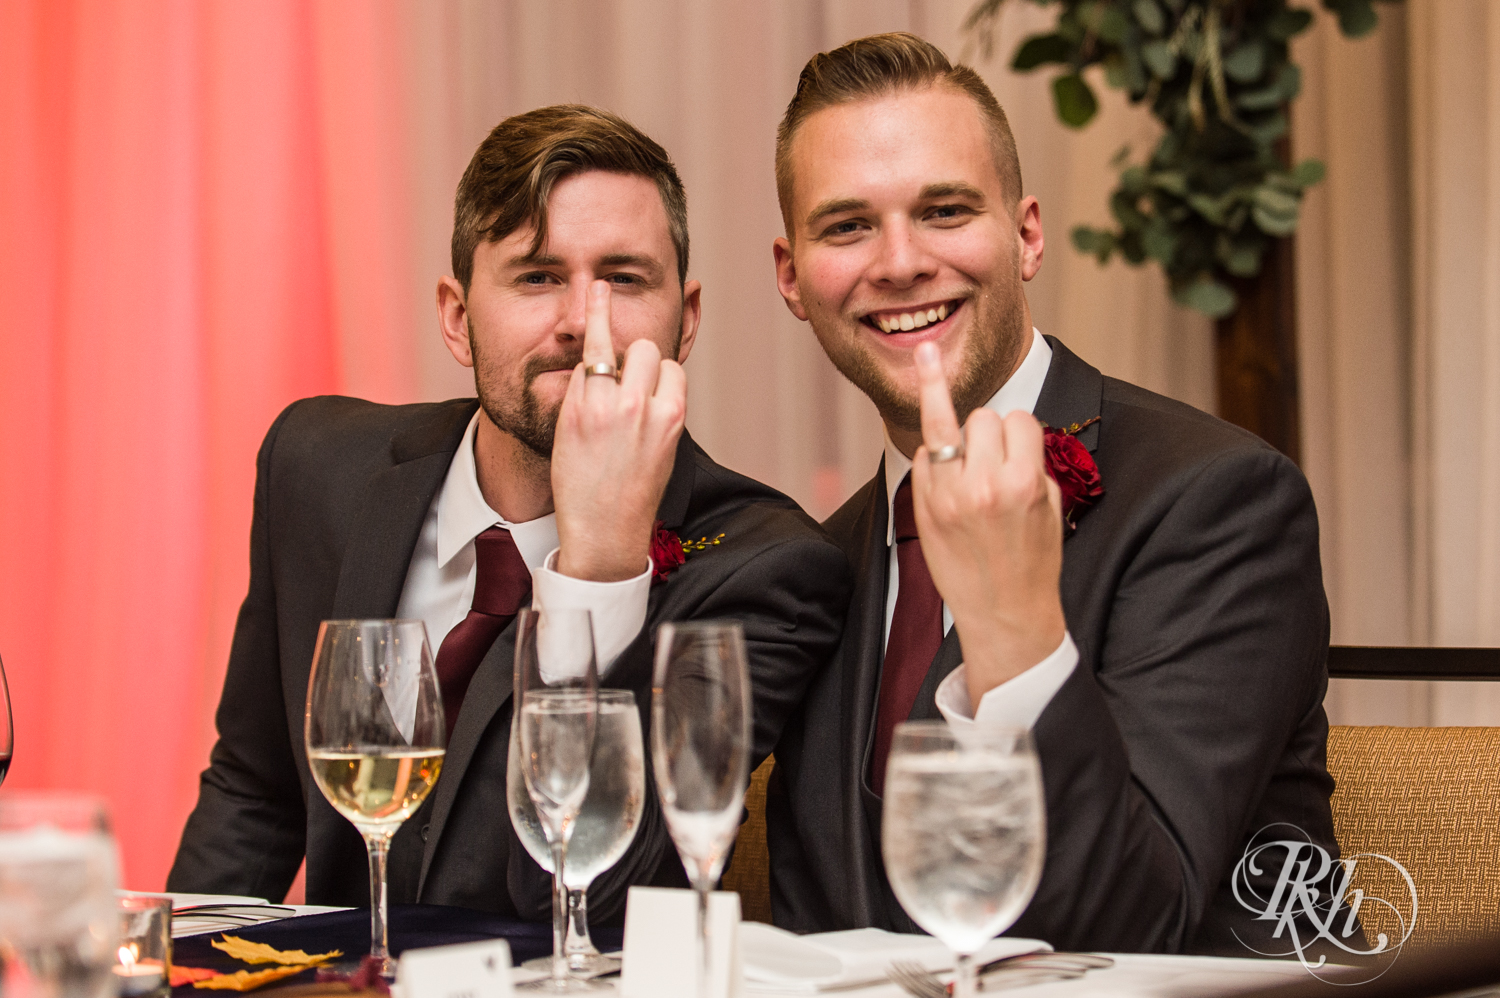 Minnesota LGBT Wedding Photographer grooms with rings